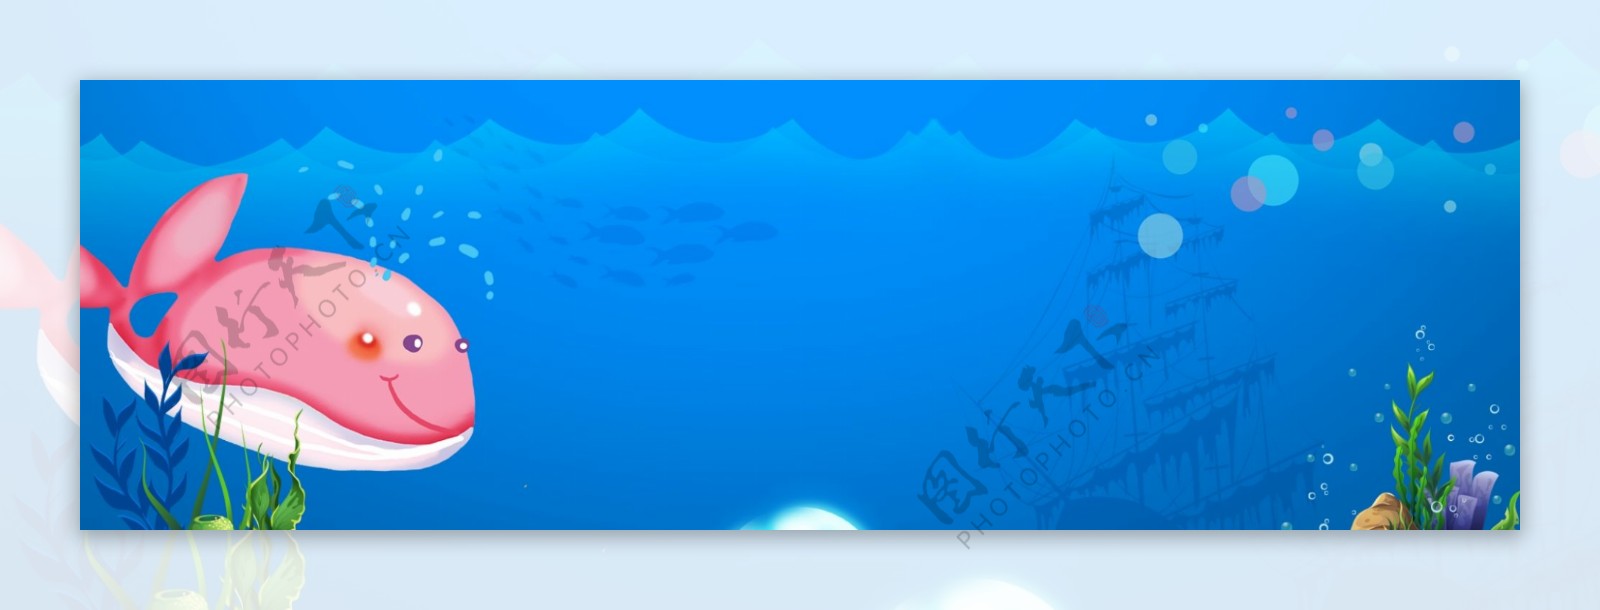 金鱼海底海洋banner背景